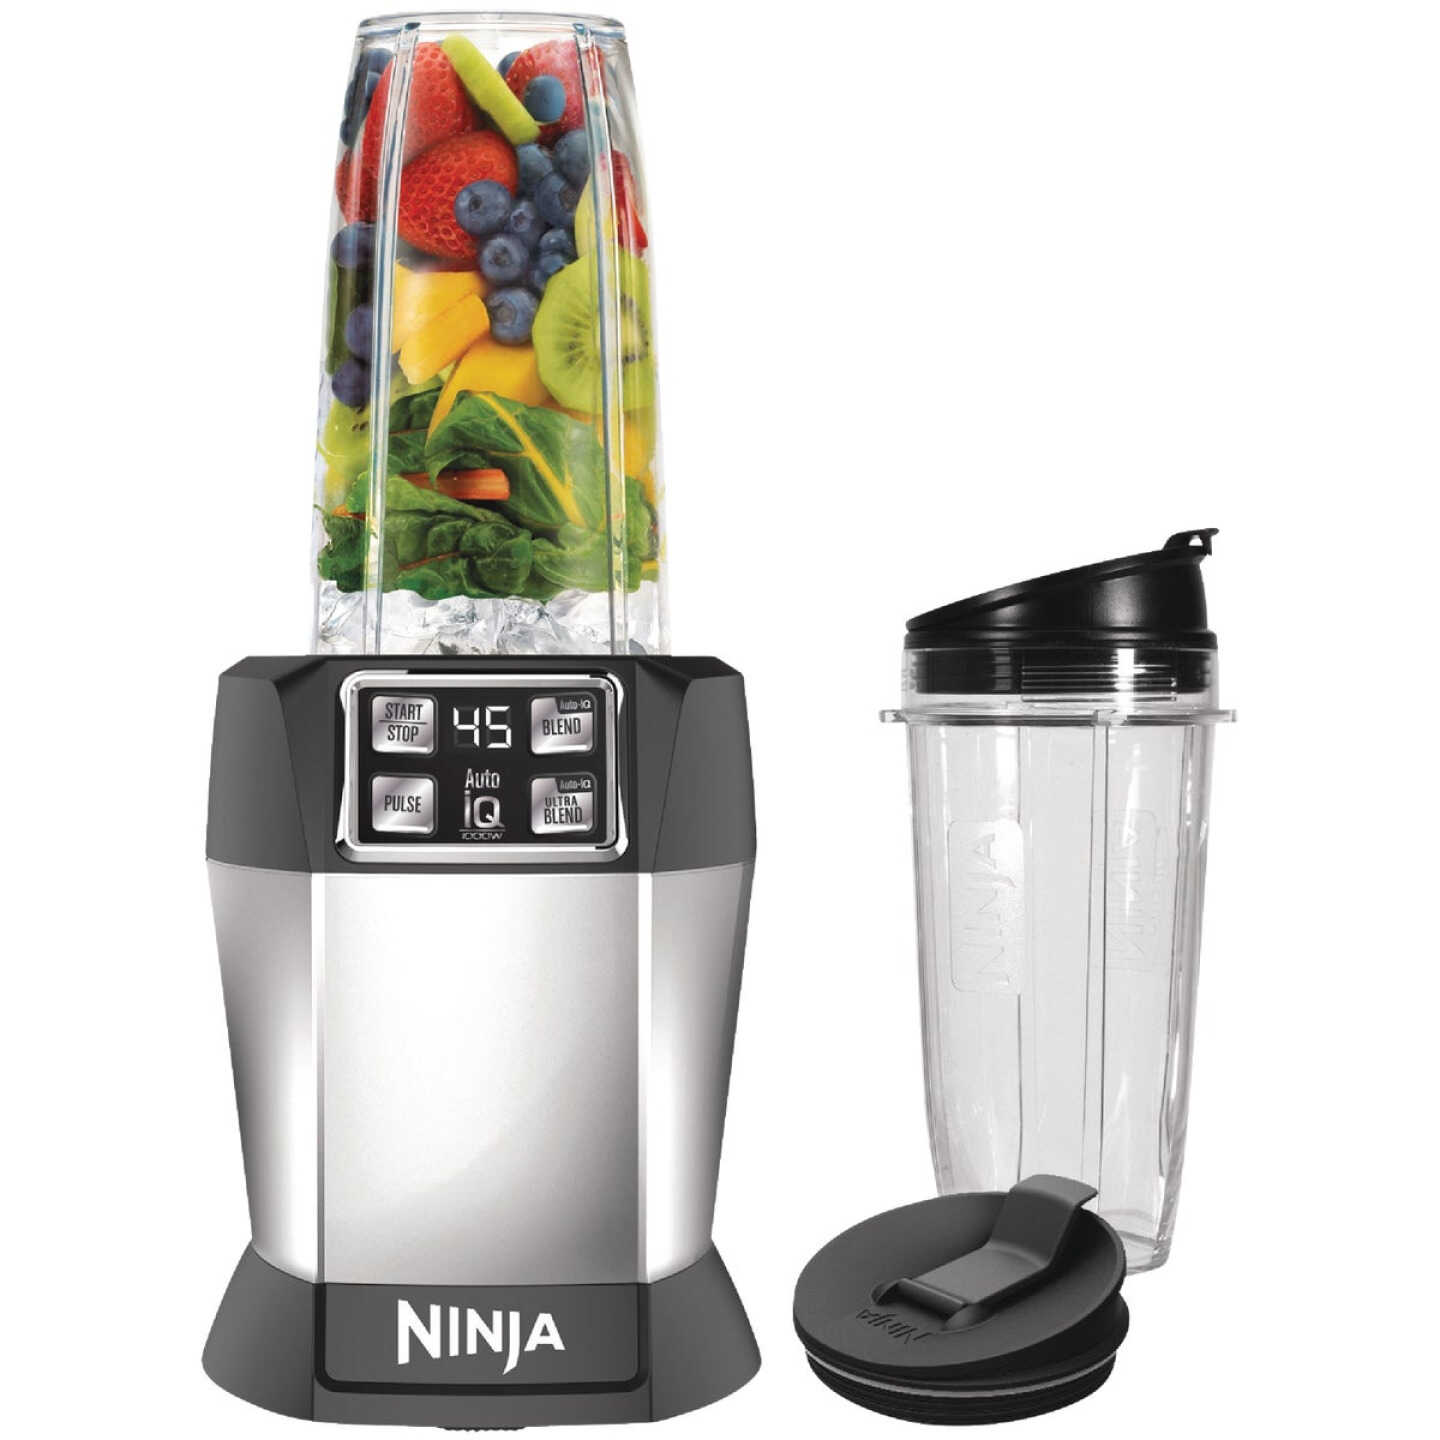 Ninja Nutri Ninja Pro Personal Blender Review - Consumer Reports